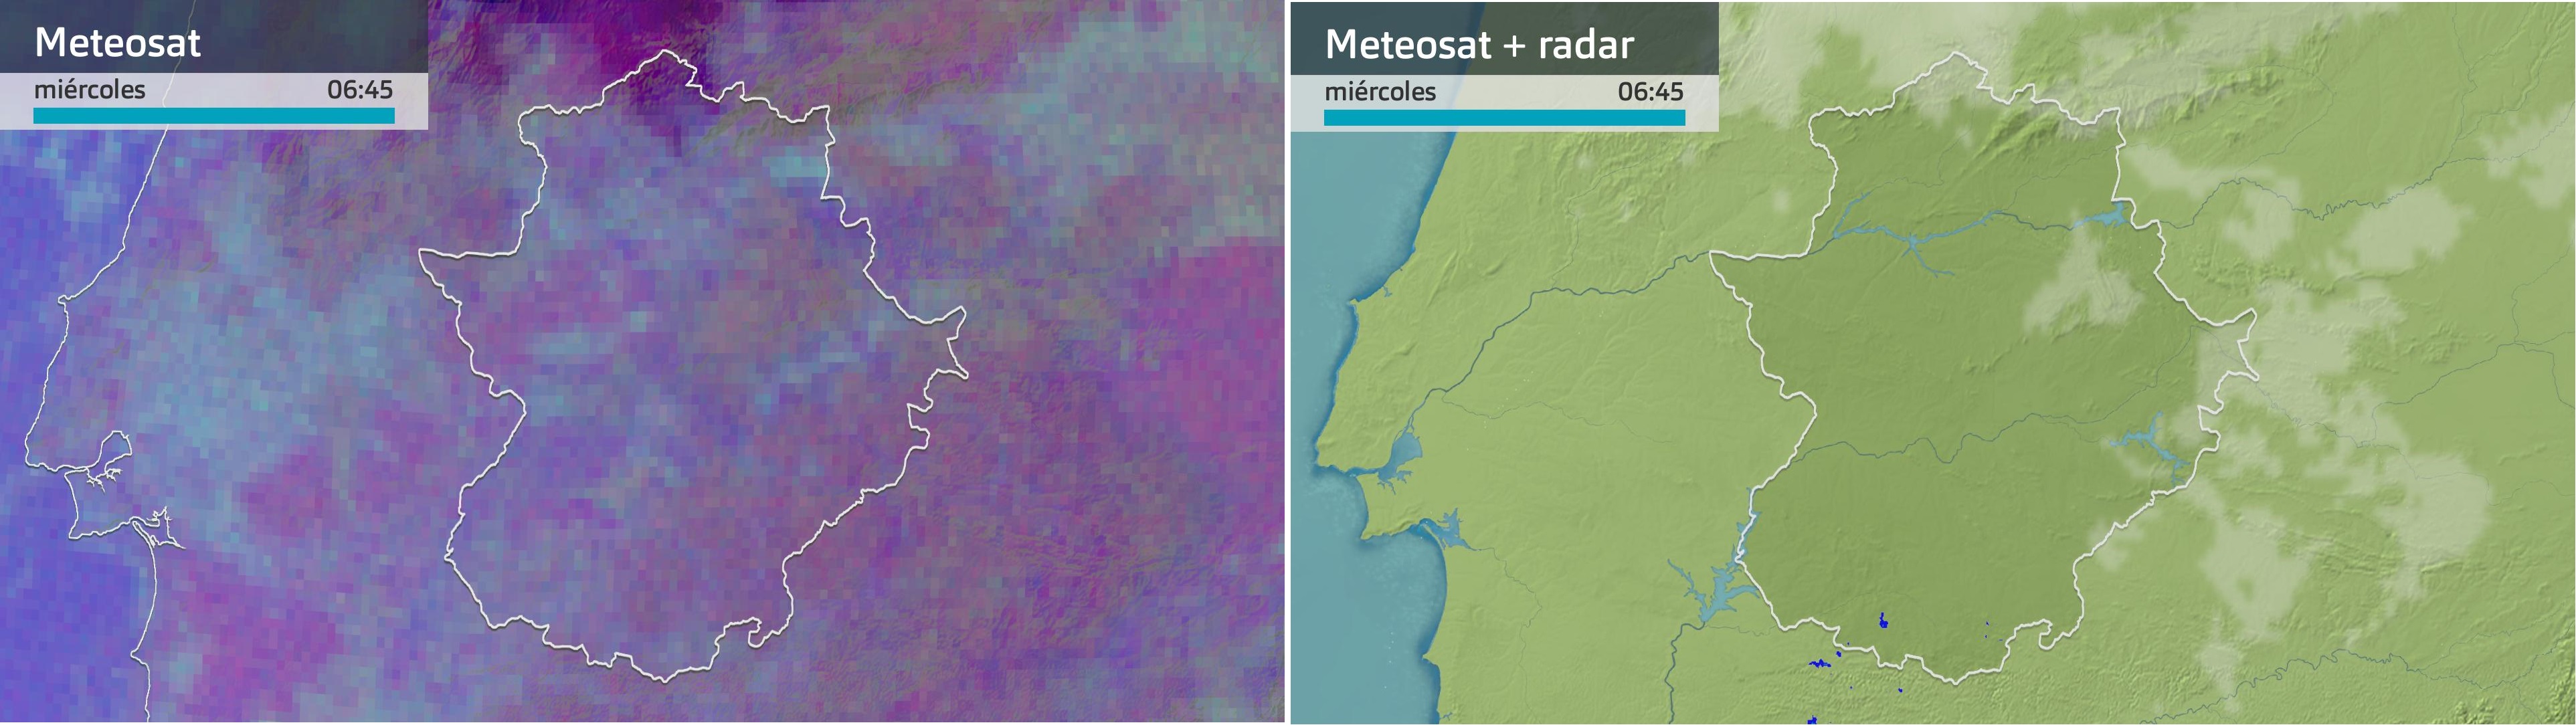 Imagen del Meteosat y Meteosat + radar meteorológico miércoles 3 de abril 6:45 h.